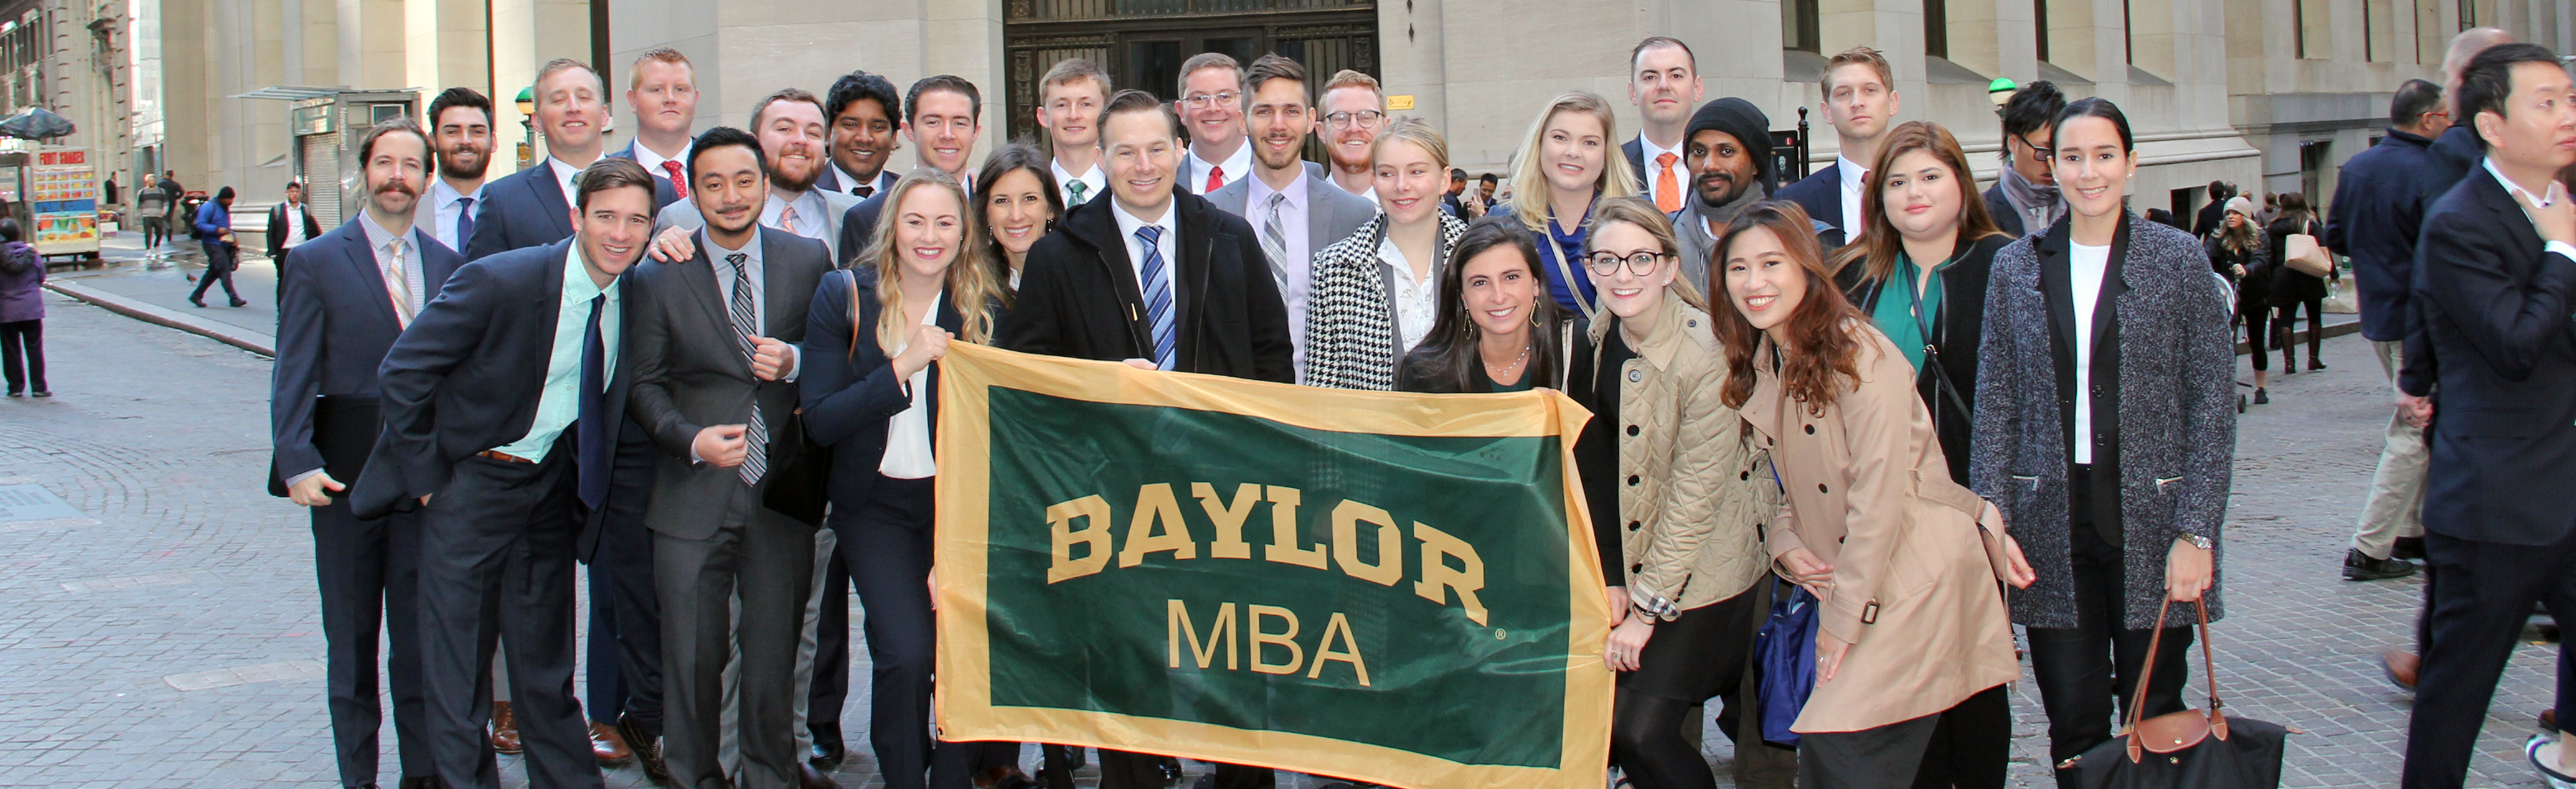 Baylor MBA students holding a Baylor MBA flag